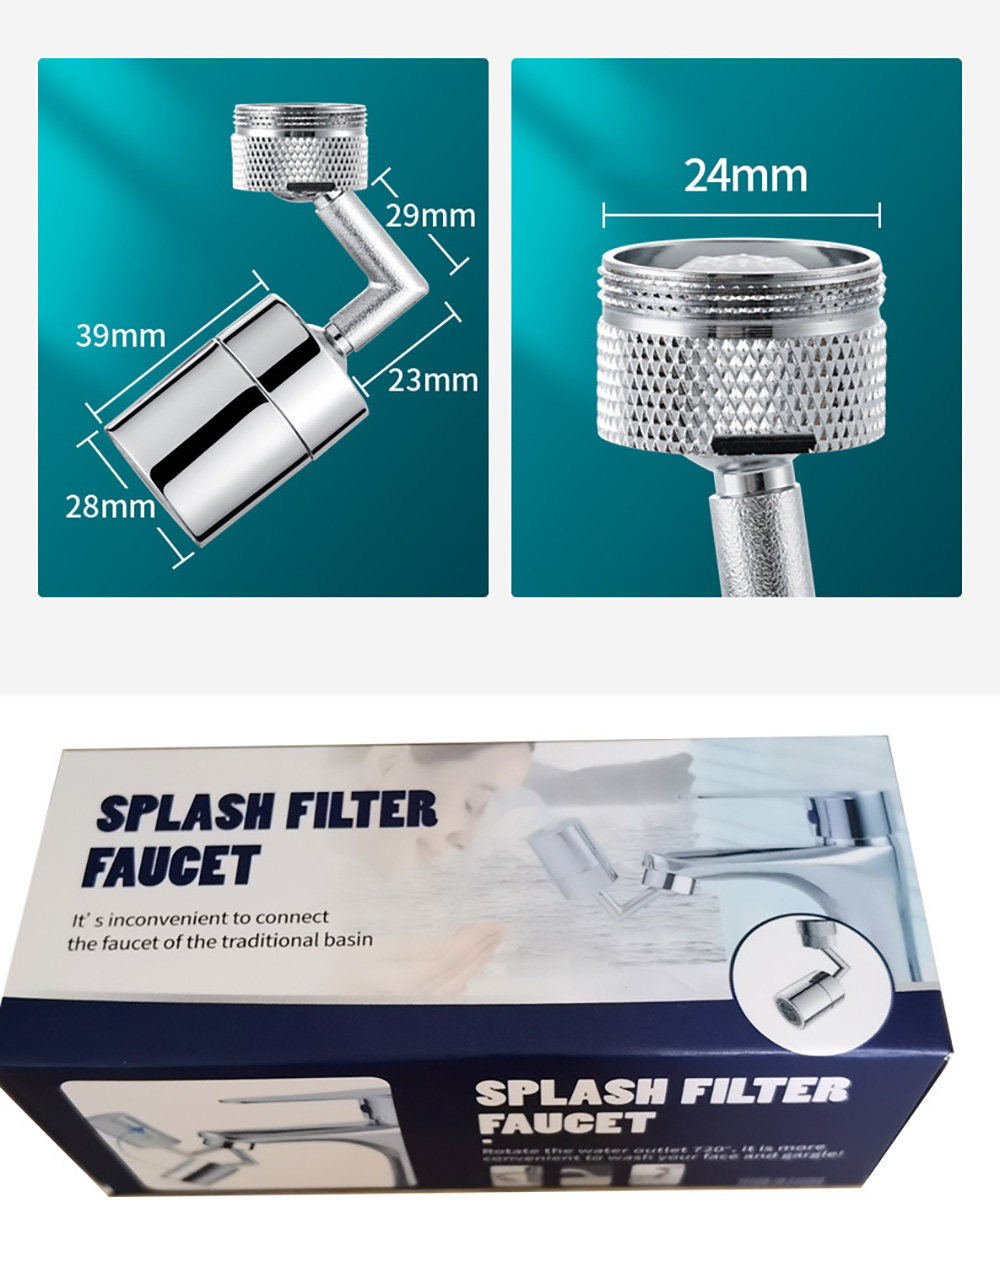 720 Degree Universal Rotating Faucet Extender, Anti-splash Filter Faucet Sprayer Head, Dual-Mode Water Outlet